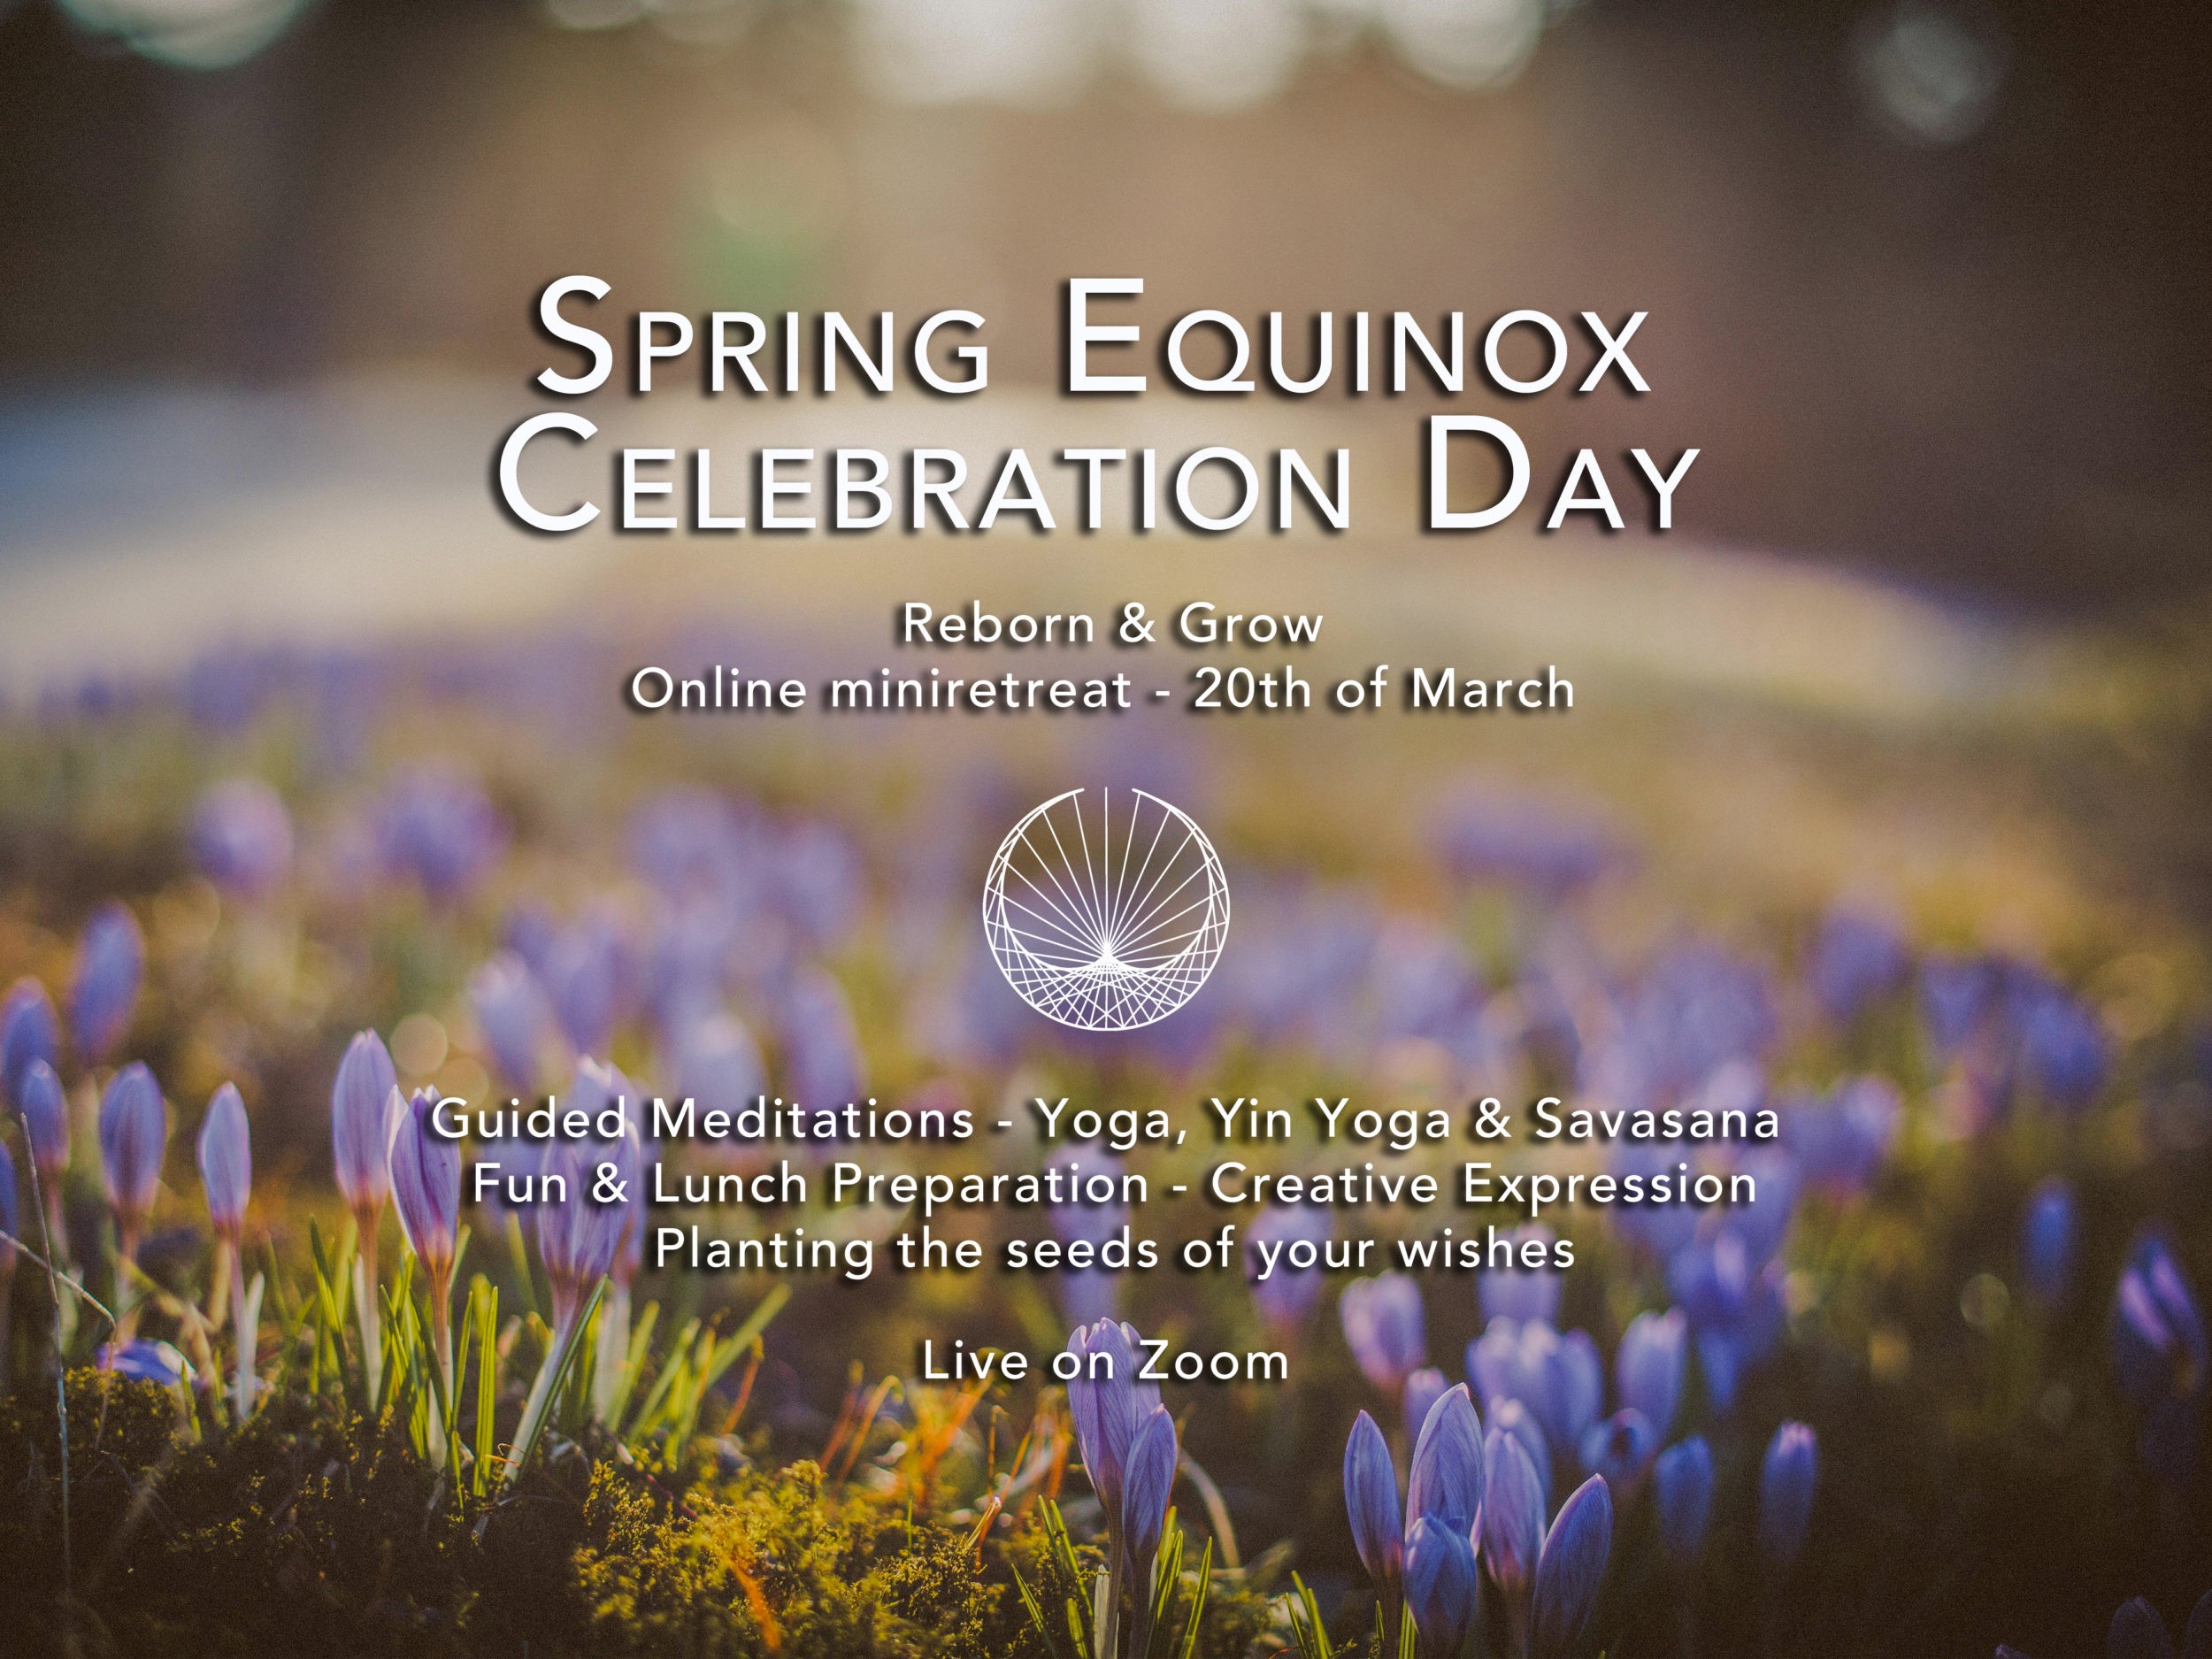 Spring Equinox Celebration Day Reborn & Grow! The Drunken